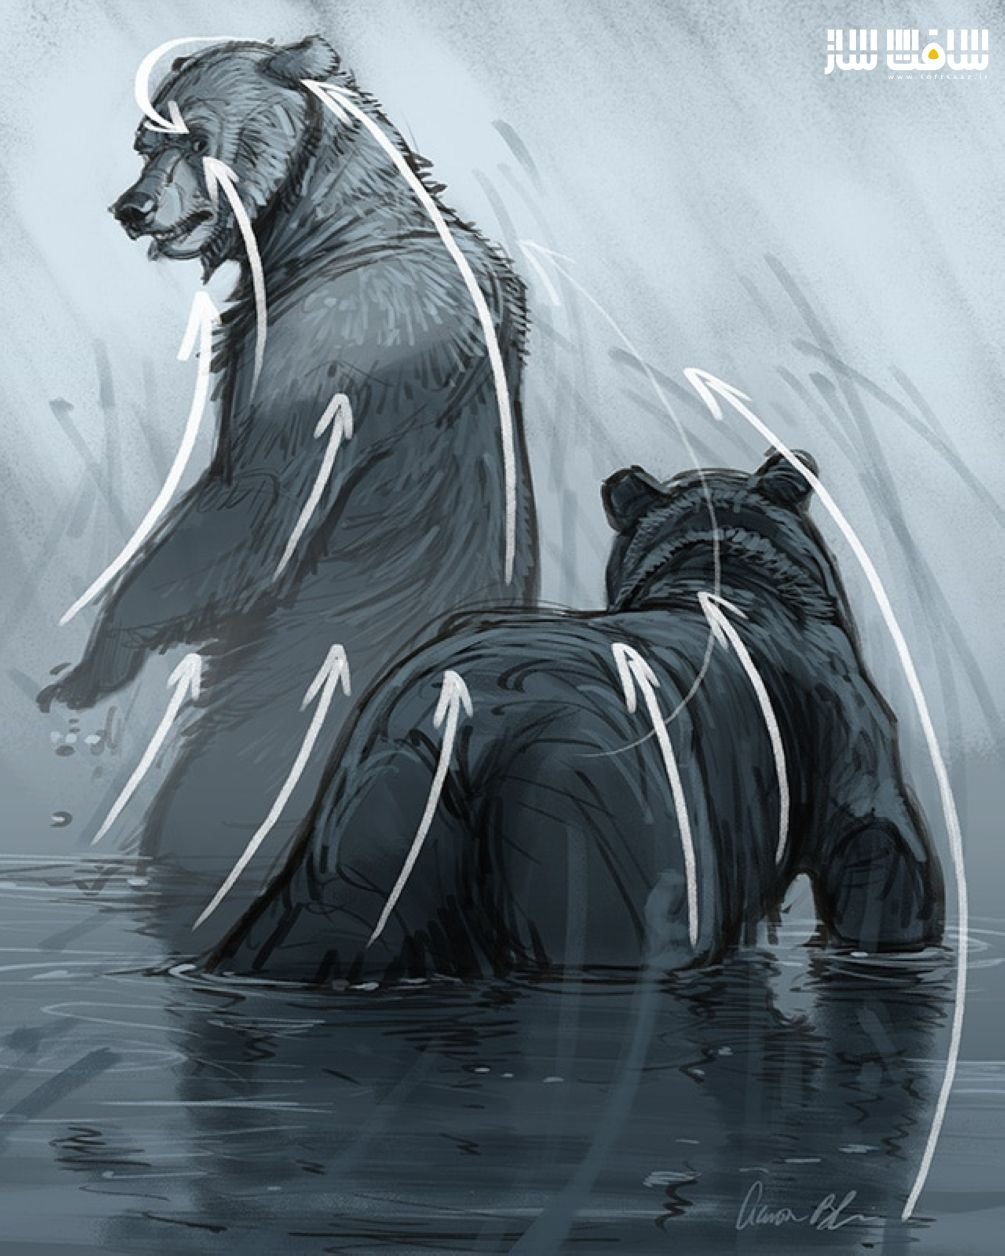 Drew born. Aaron Blaise медведь. Беар медведь концепт арт. Одинокий медведь. Одинокий медведь арт.